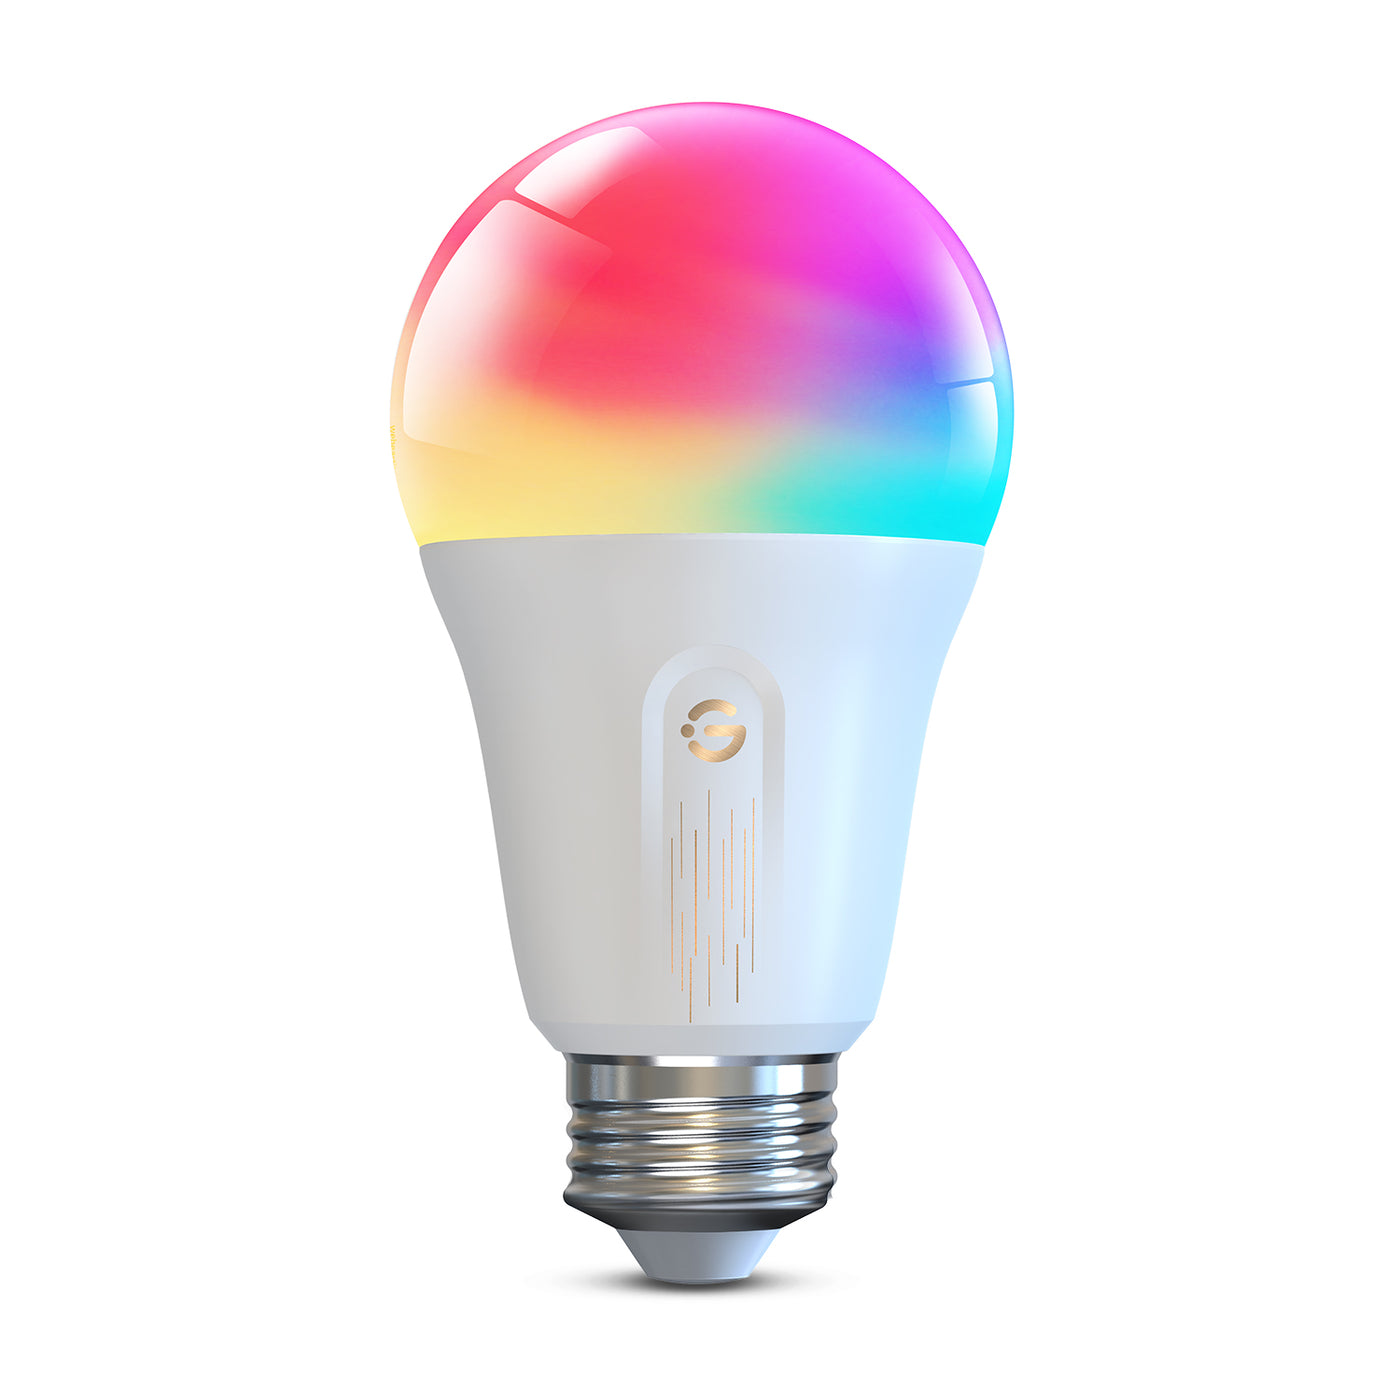 Govee Smart RGBWW Light Bulbs 1200 Lumens